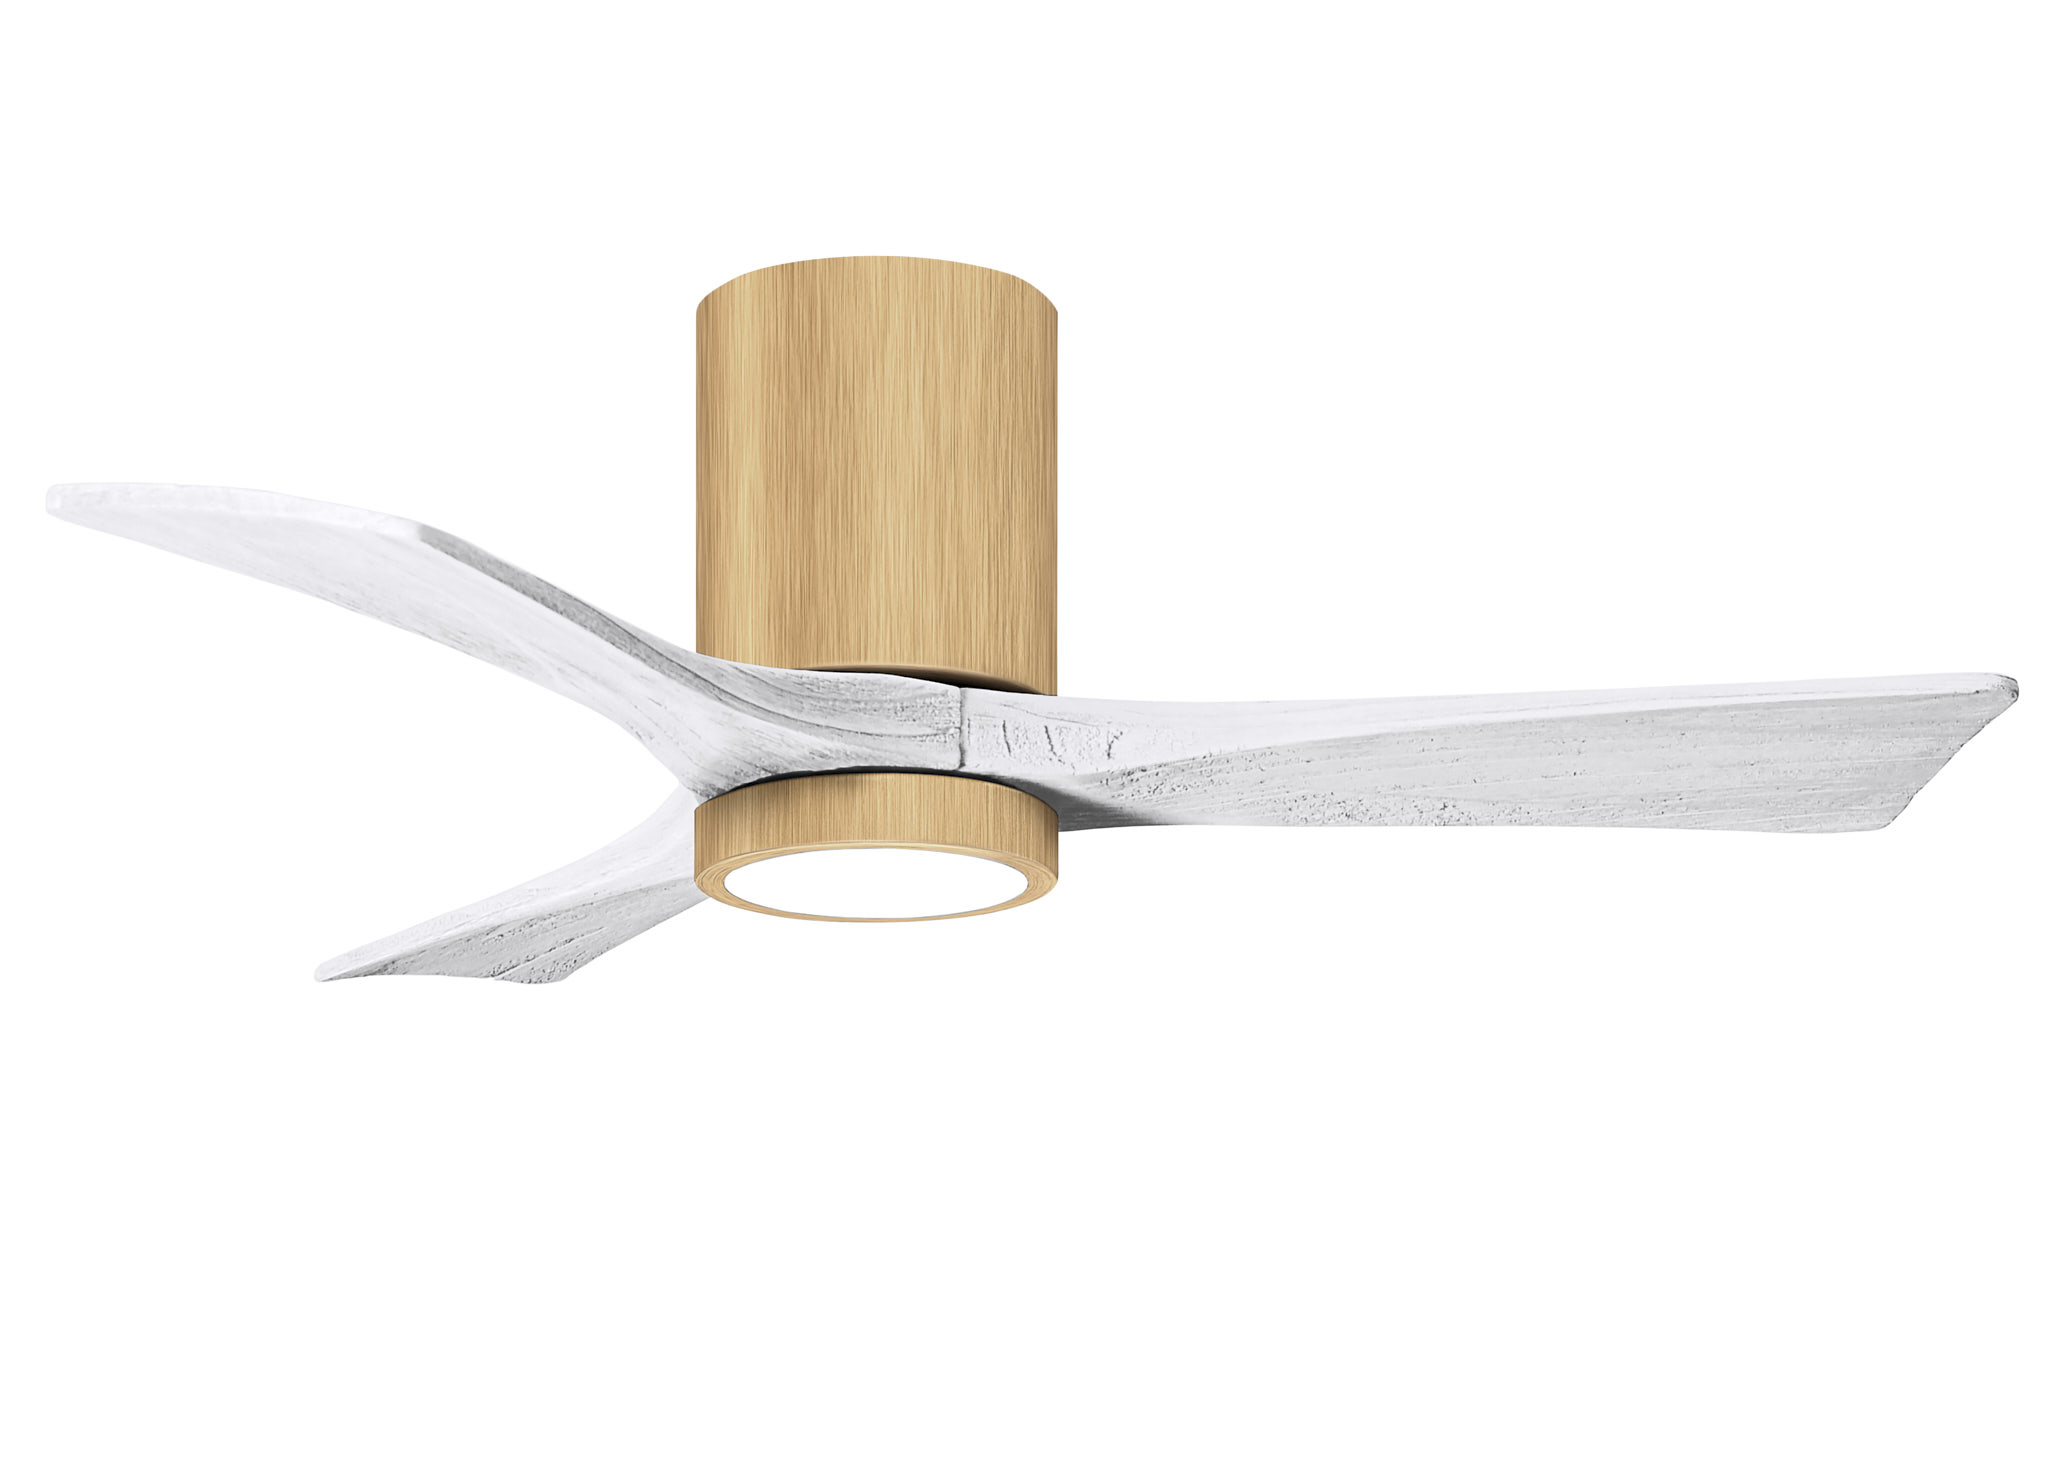 Irene-3HLK 6-speed ceiling fan in light maple finish with 42